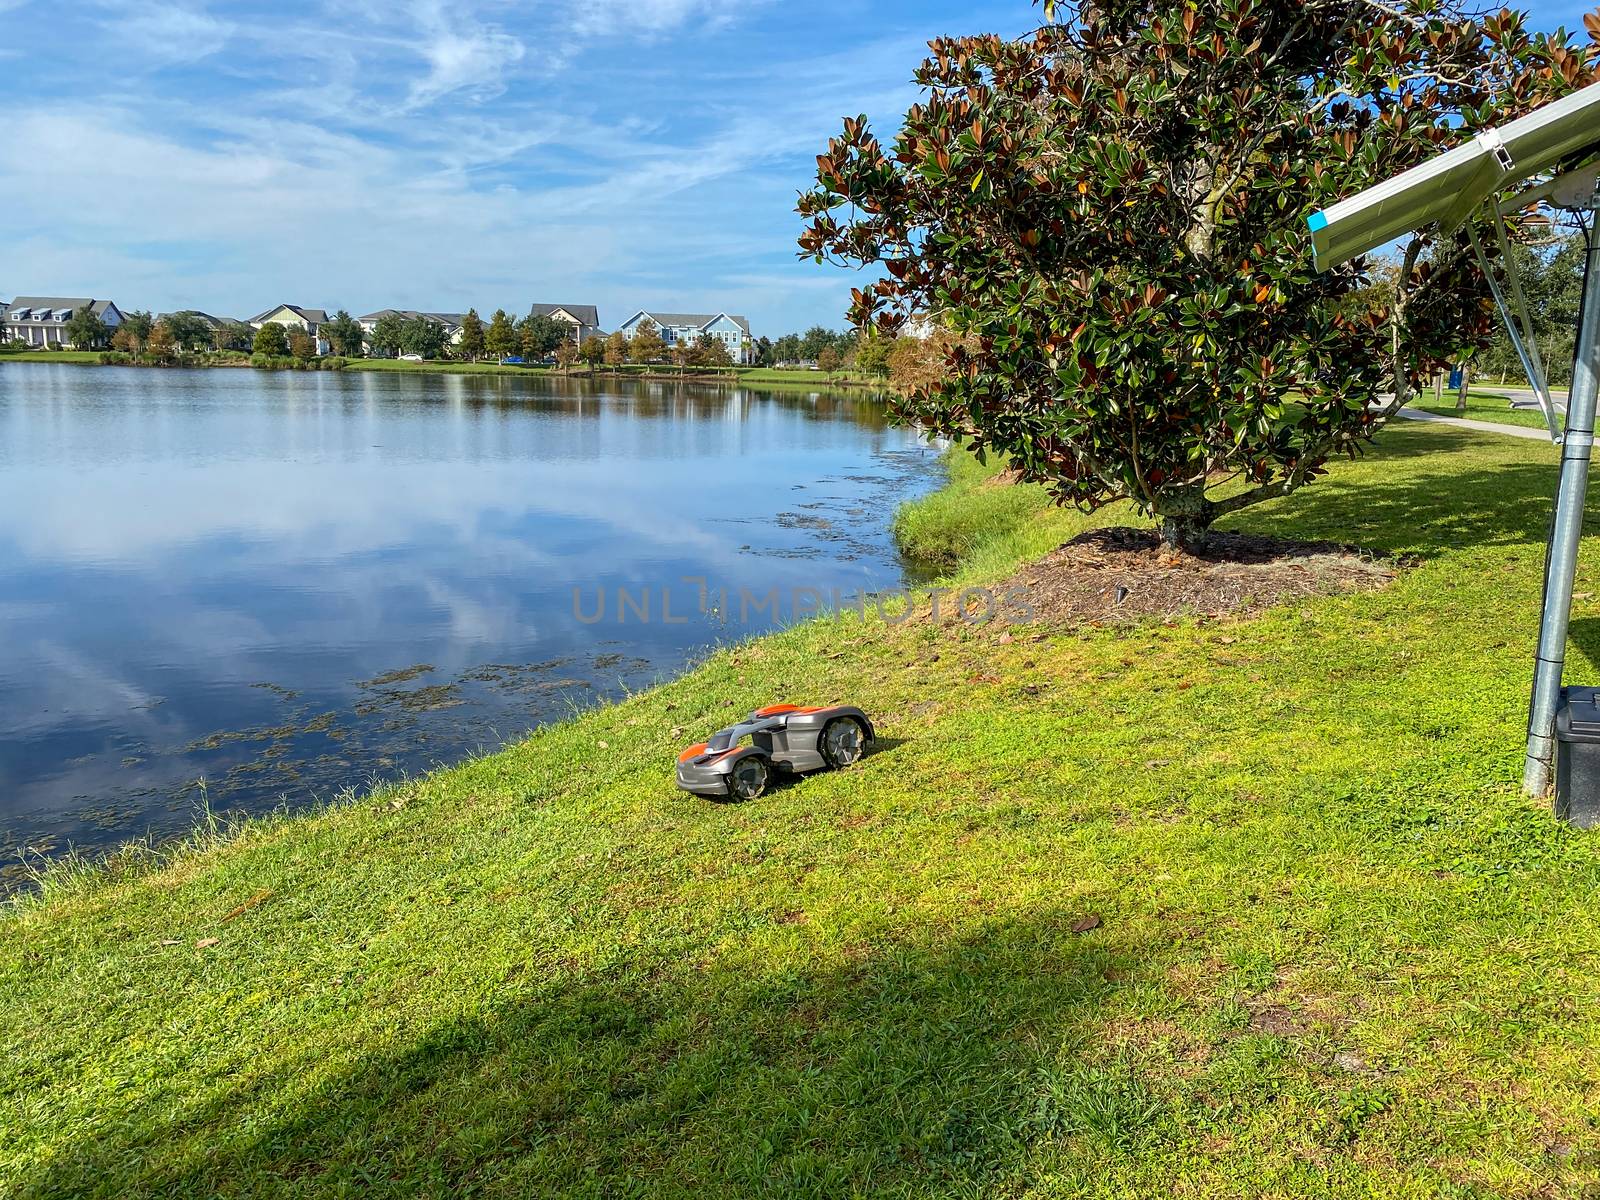 Orlando, FL./USA - 10/16/20:  A Husqvarna autonomous lawn mower mowing near a lake in the Laureate Park neighborhood in Orlando, Florida